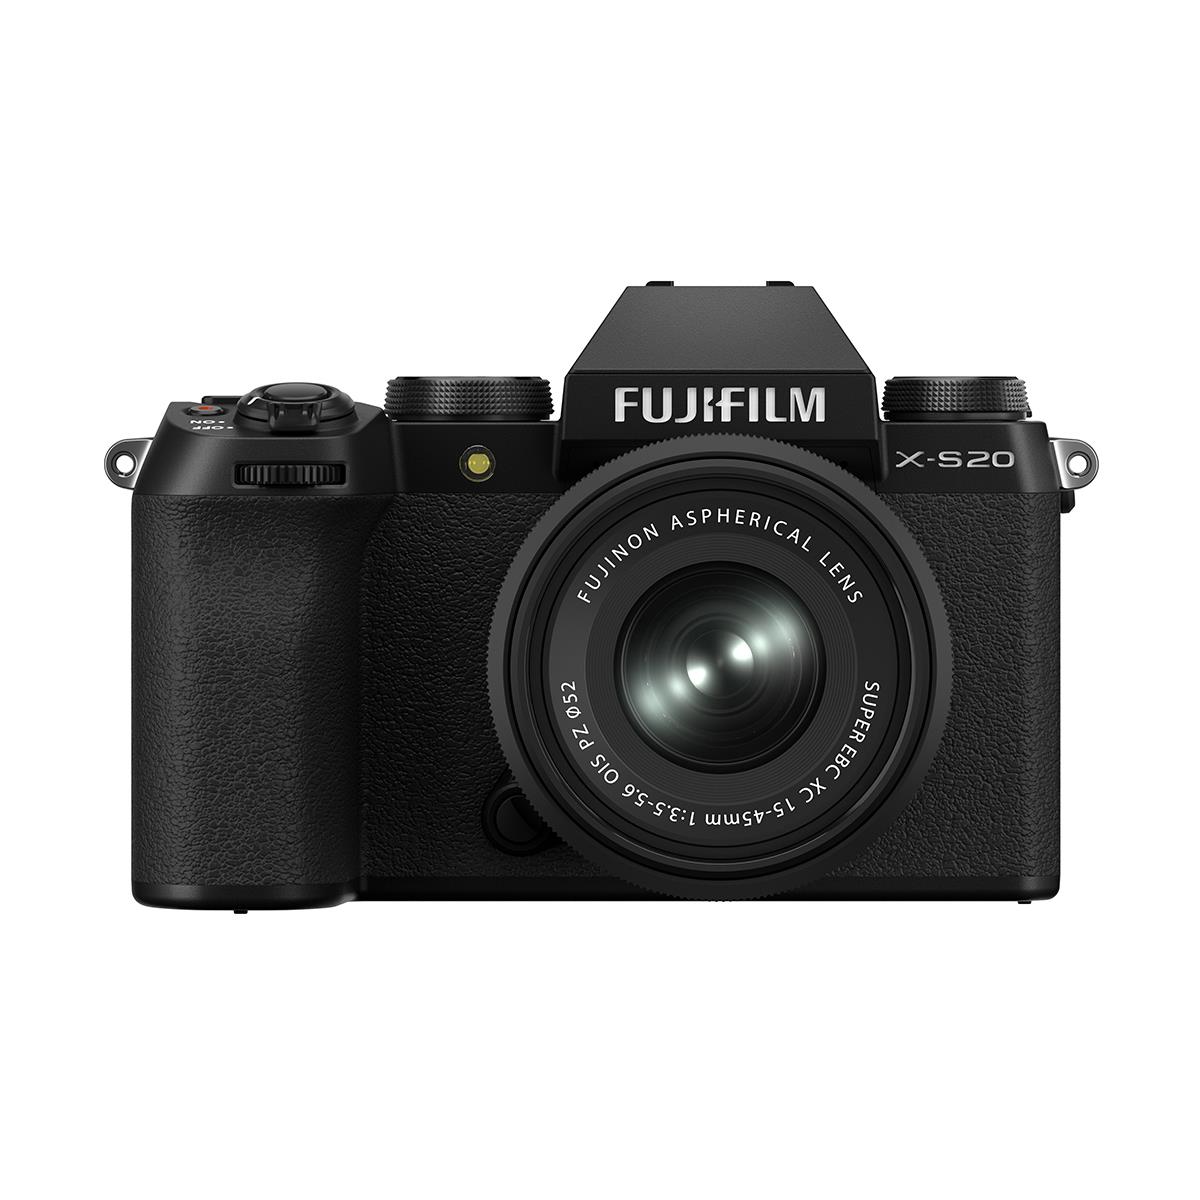 Fujifilm X-S20 Mirrorless Camera with XC 15-45mm F3.5-5.6 OIS PZ Lens Kit